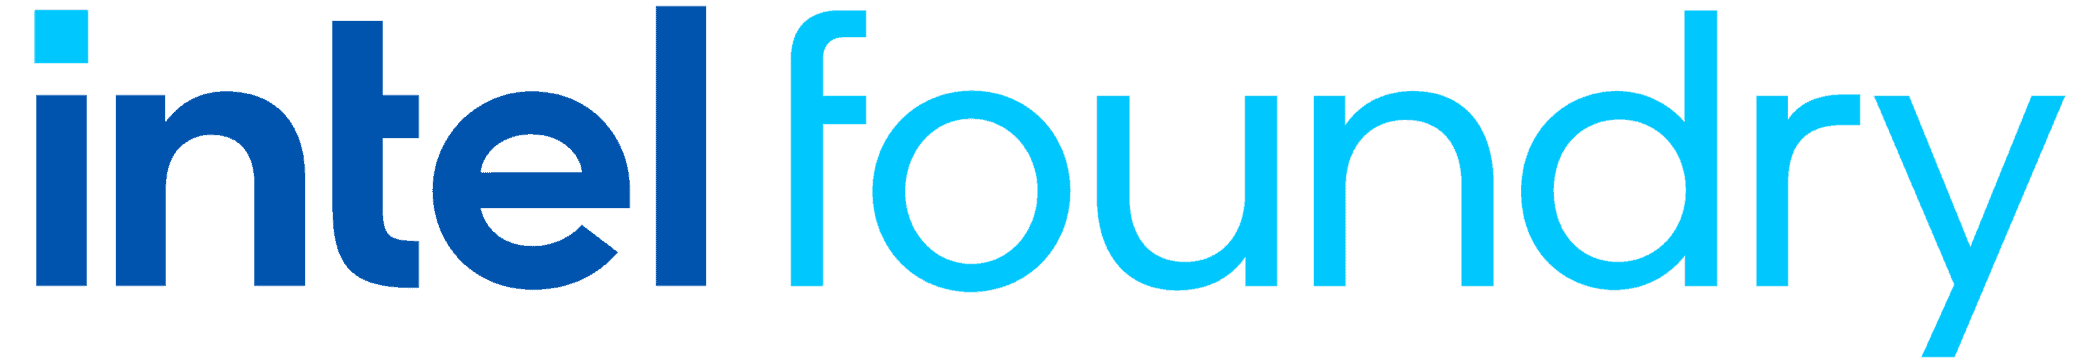 Intel Foundry logo 4